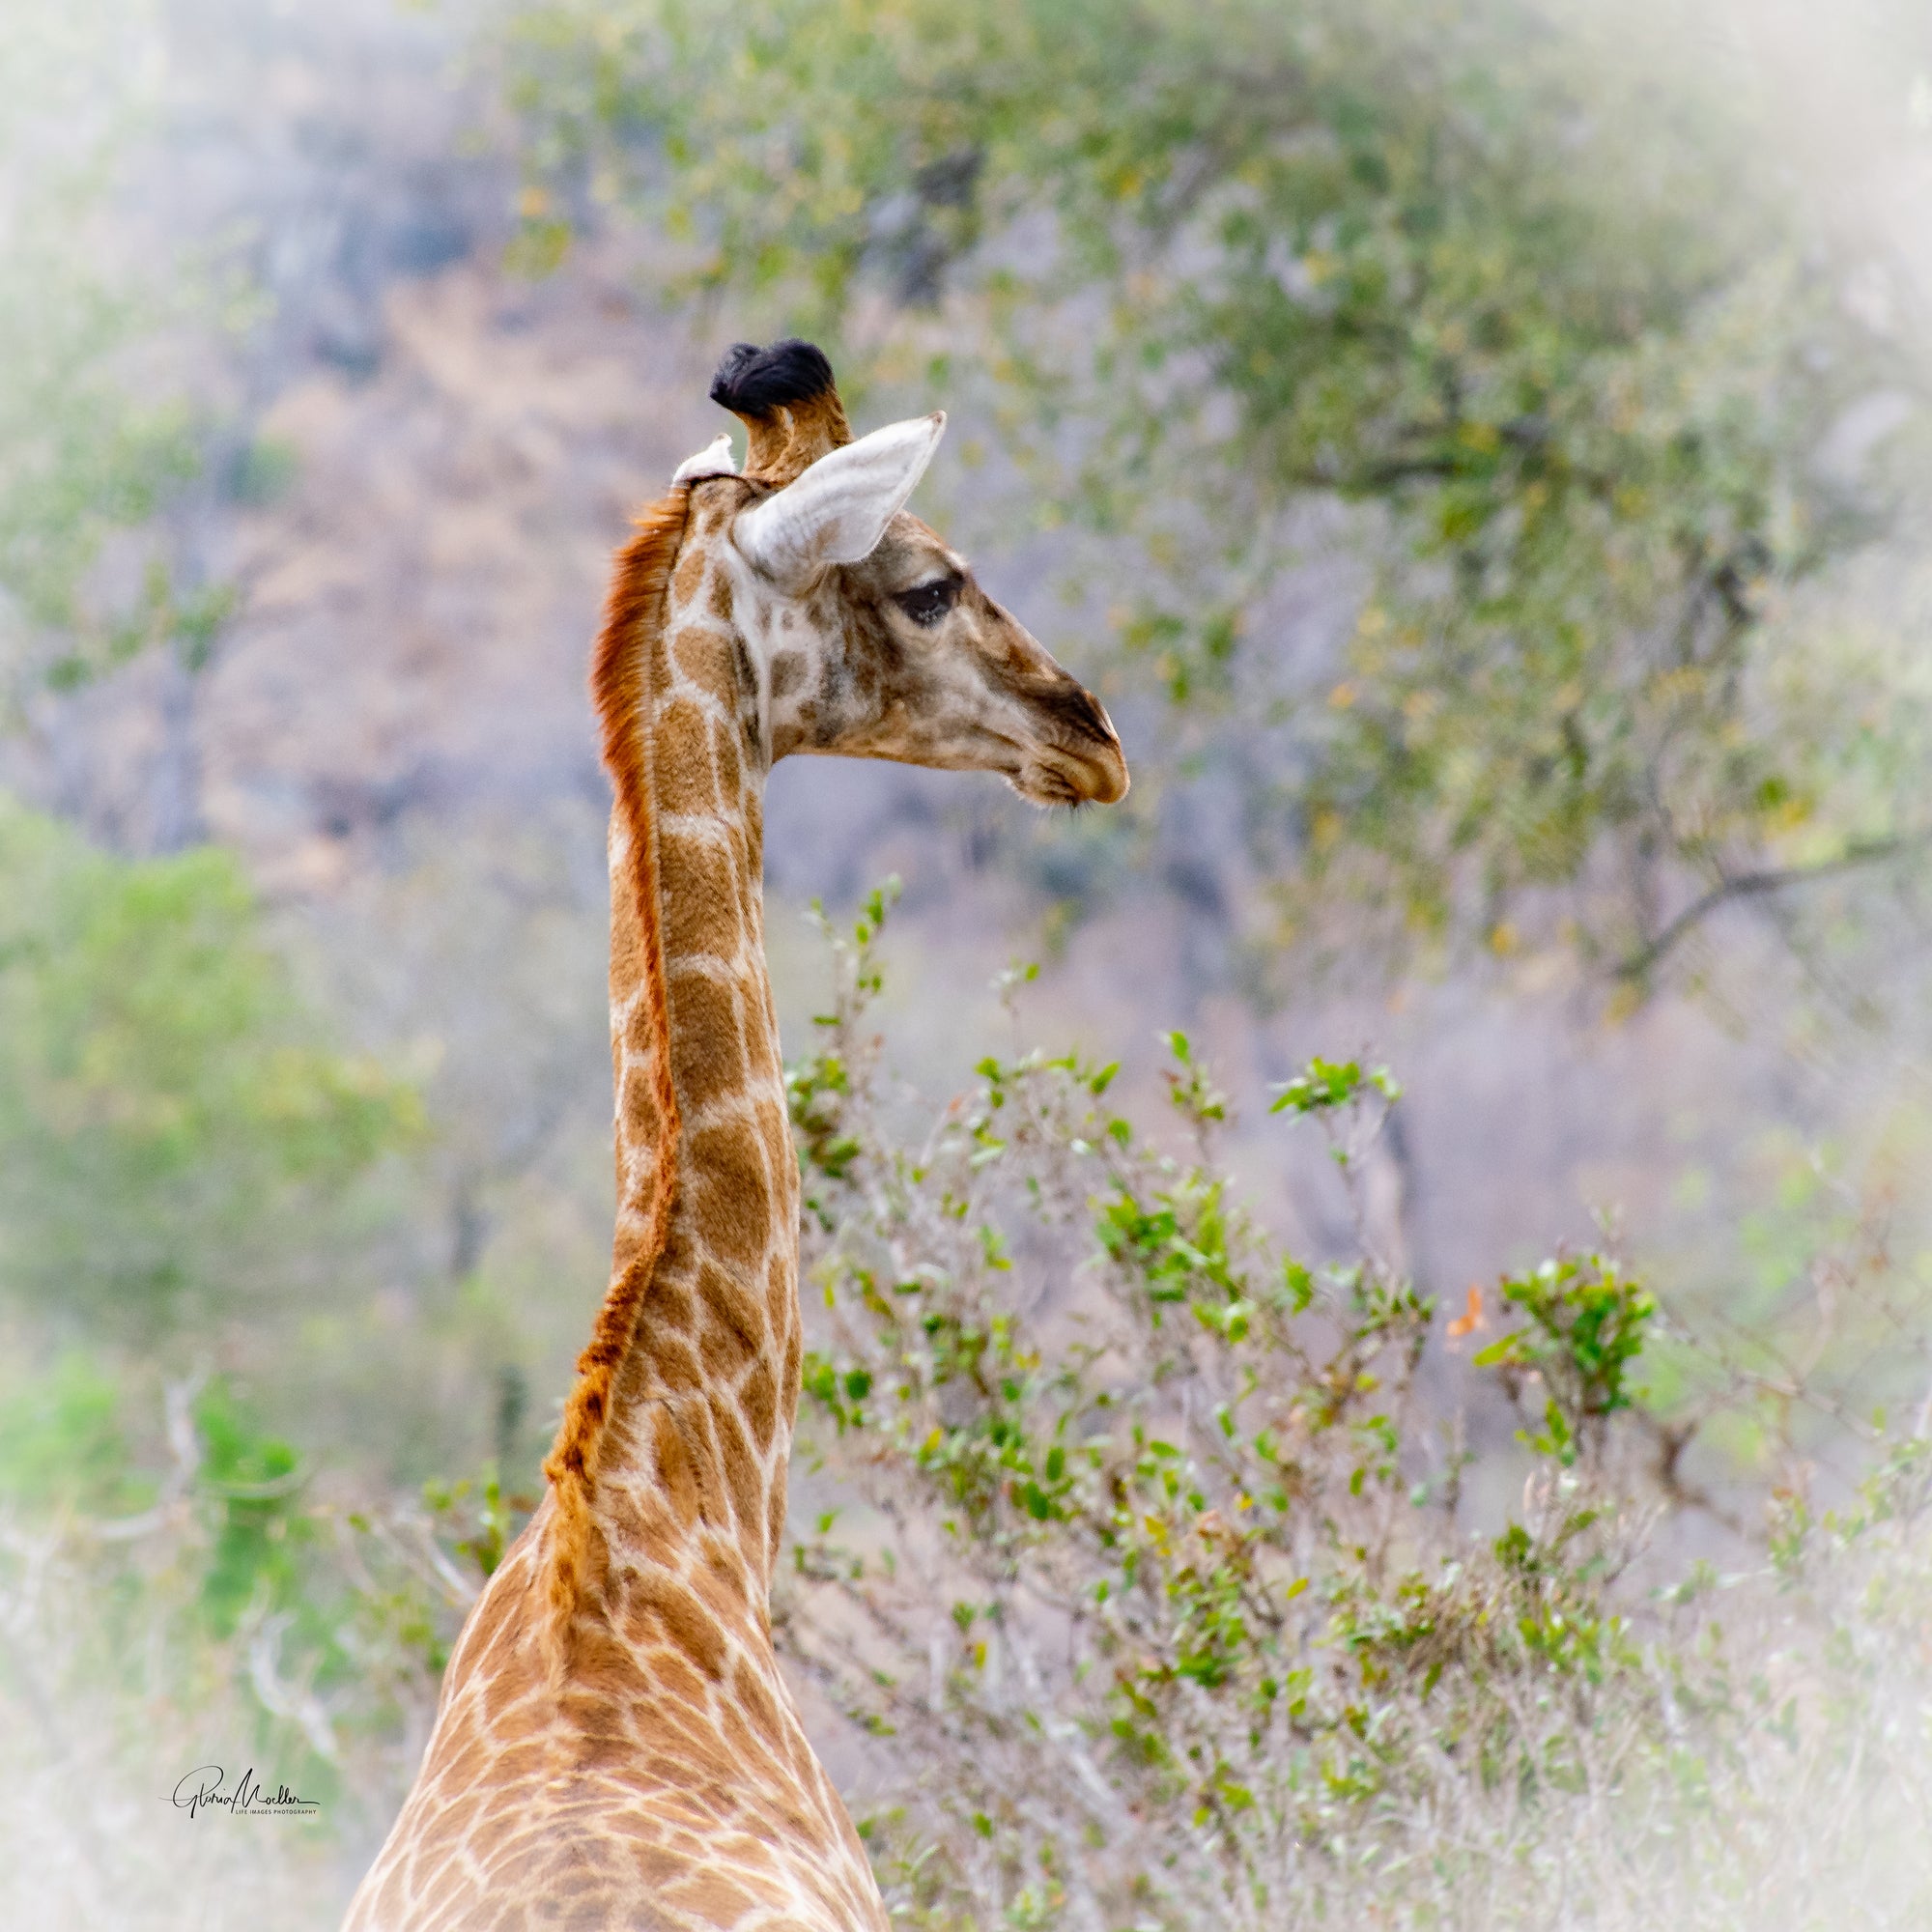 Inquisitive Giraffe in the Wild